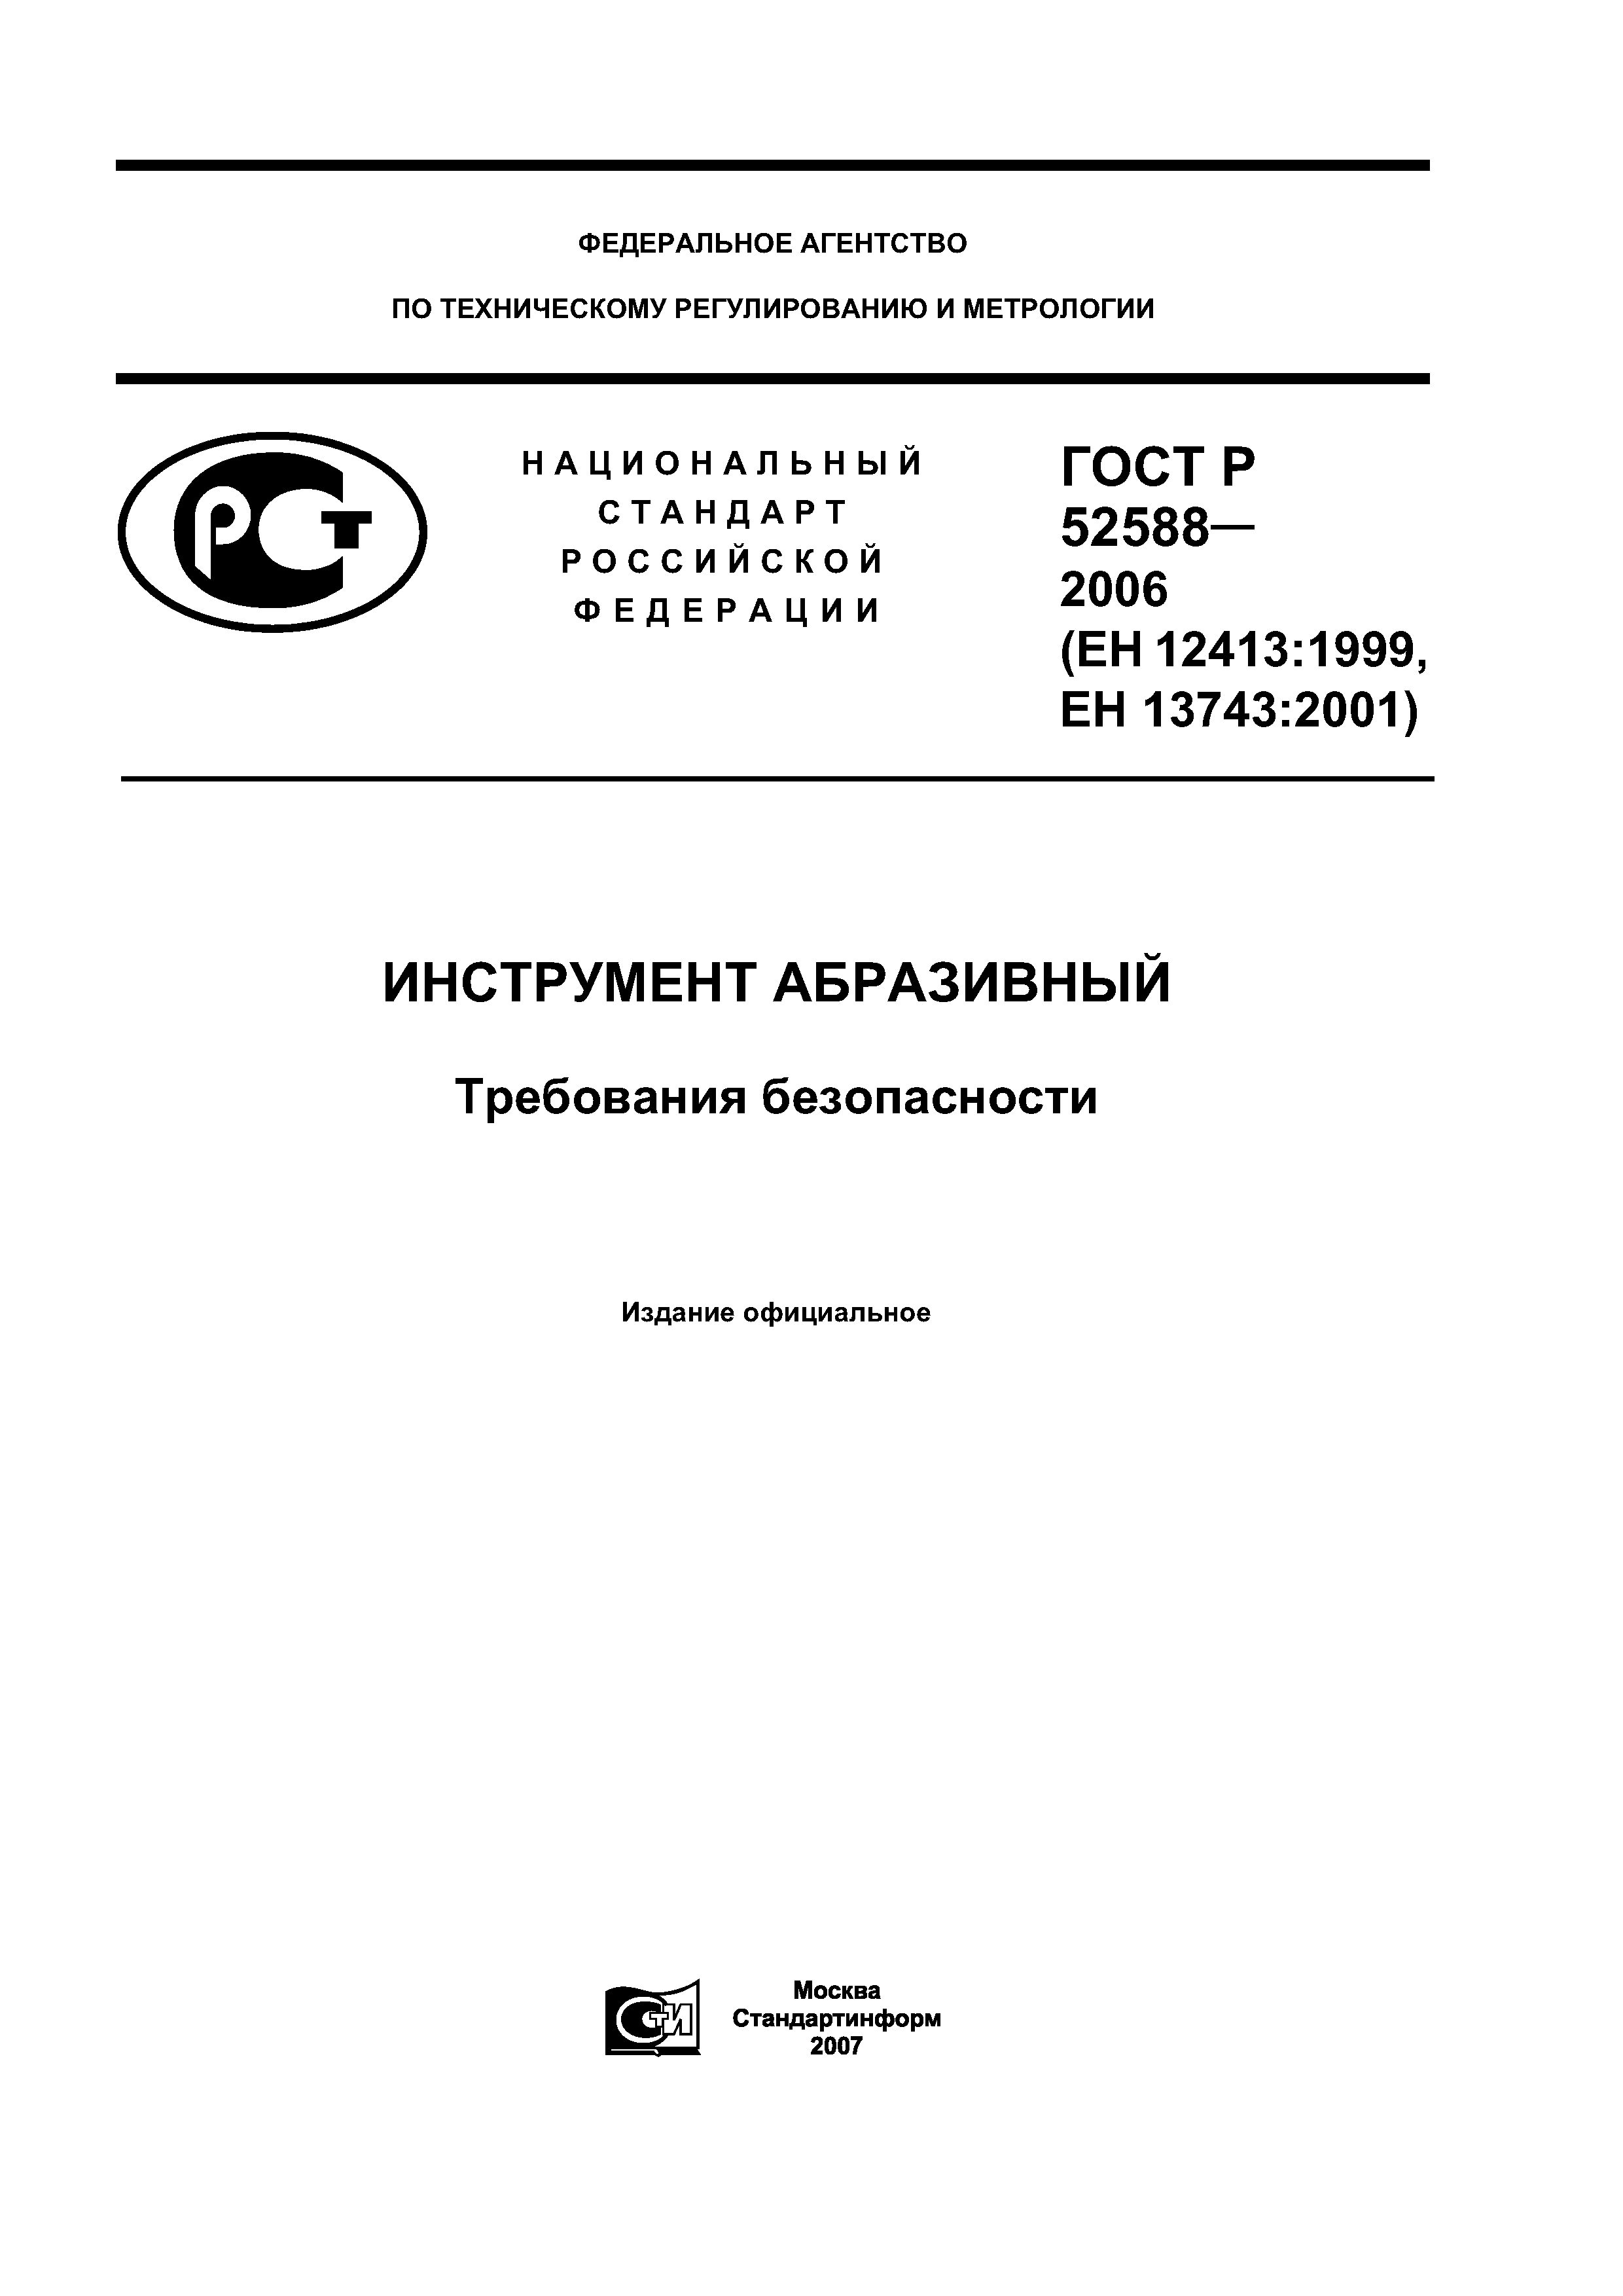 ГОСТ Р 52588-2006